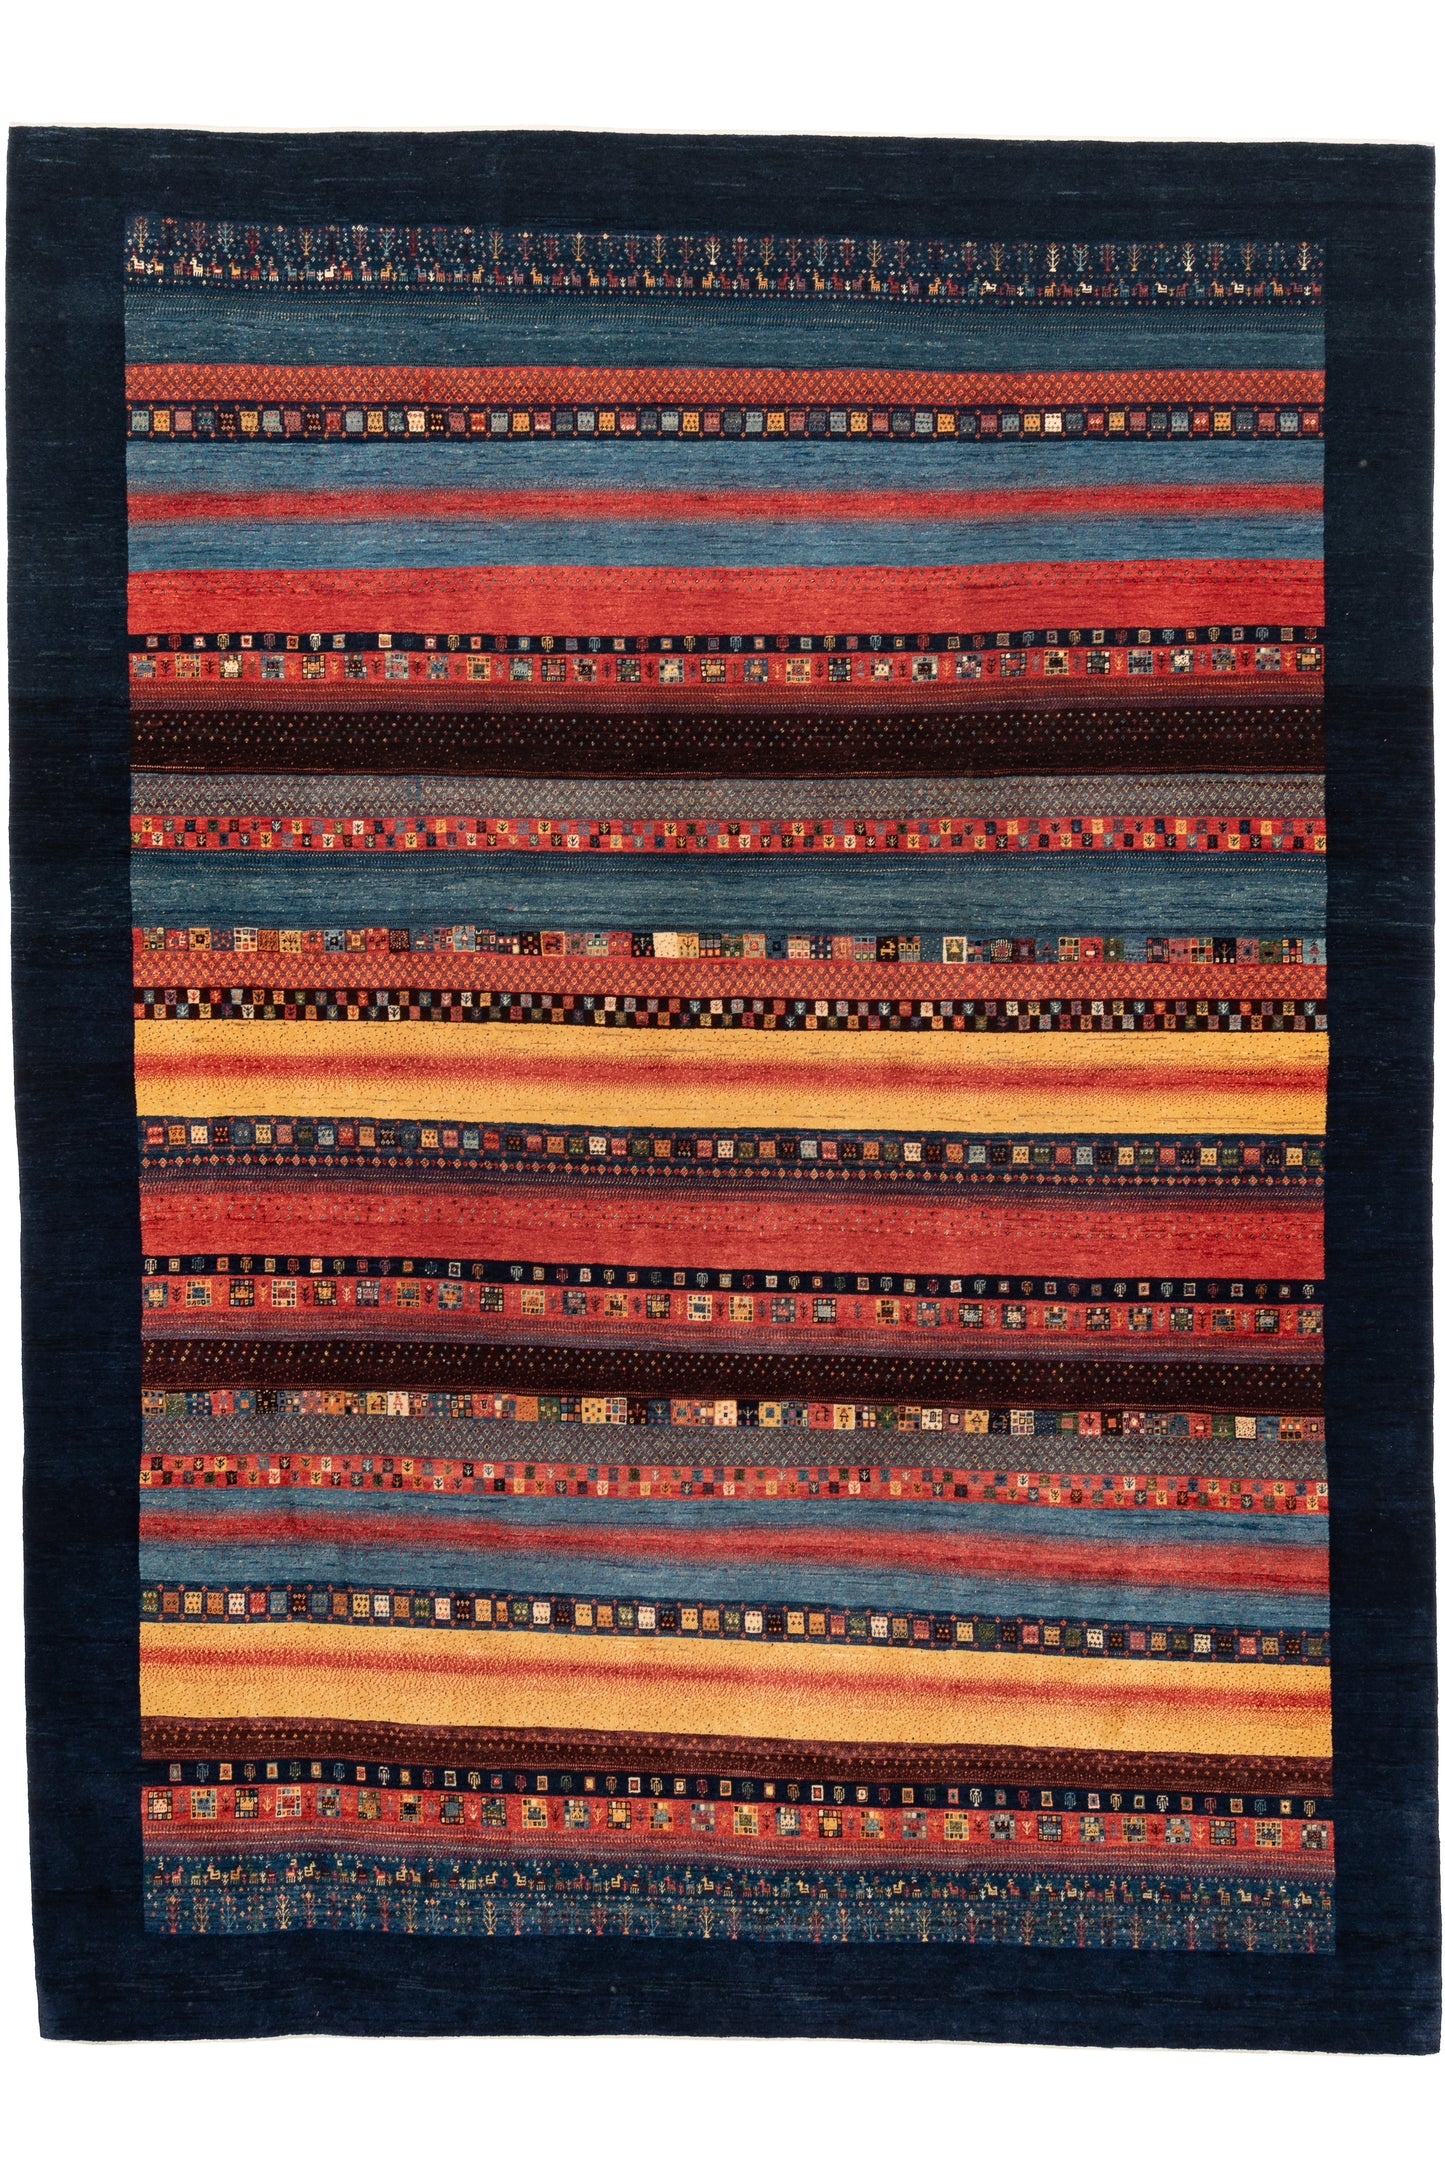 Kaschkuli Mirzai, 349 × 259 cm